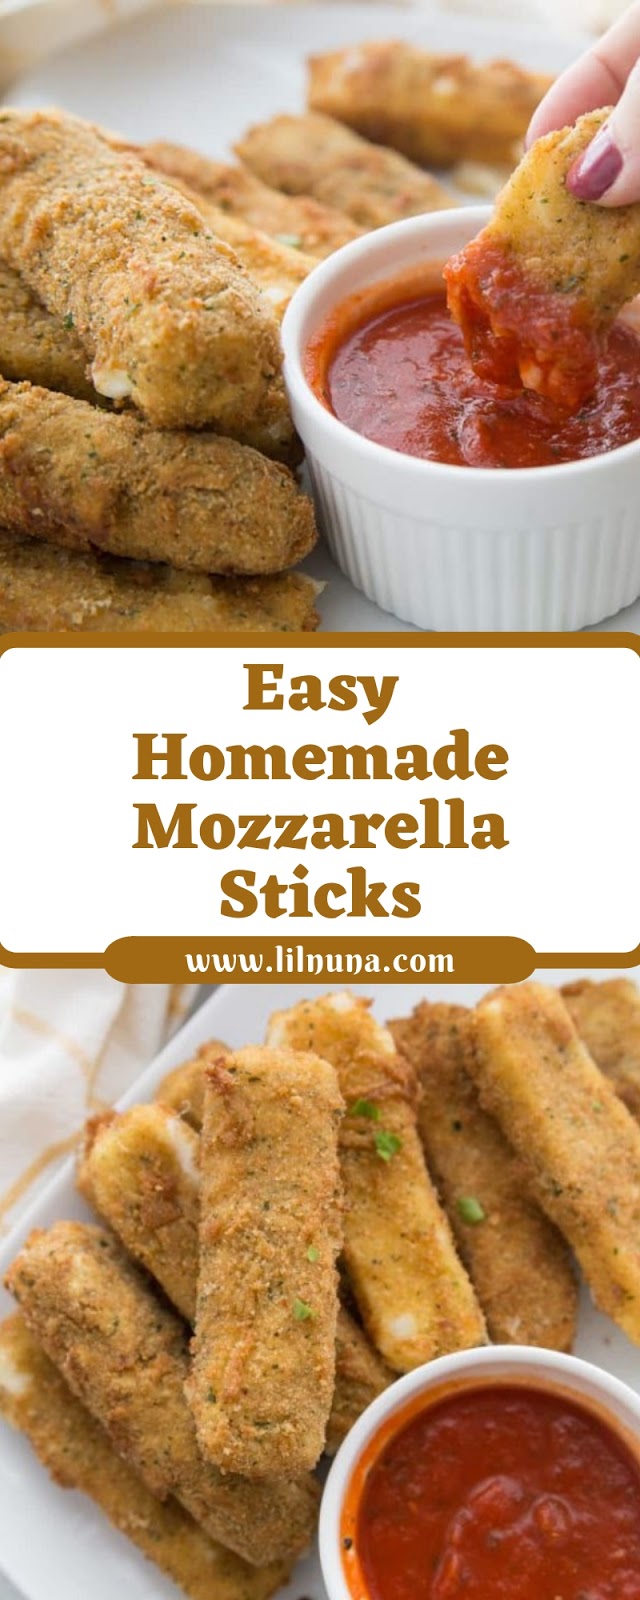 Easy Homemade Mozzarella Sticks